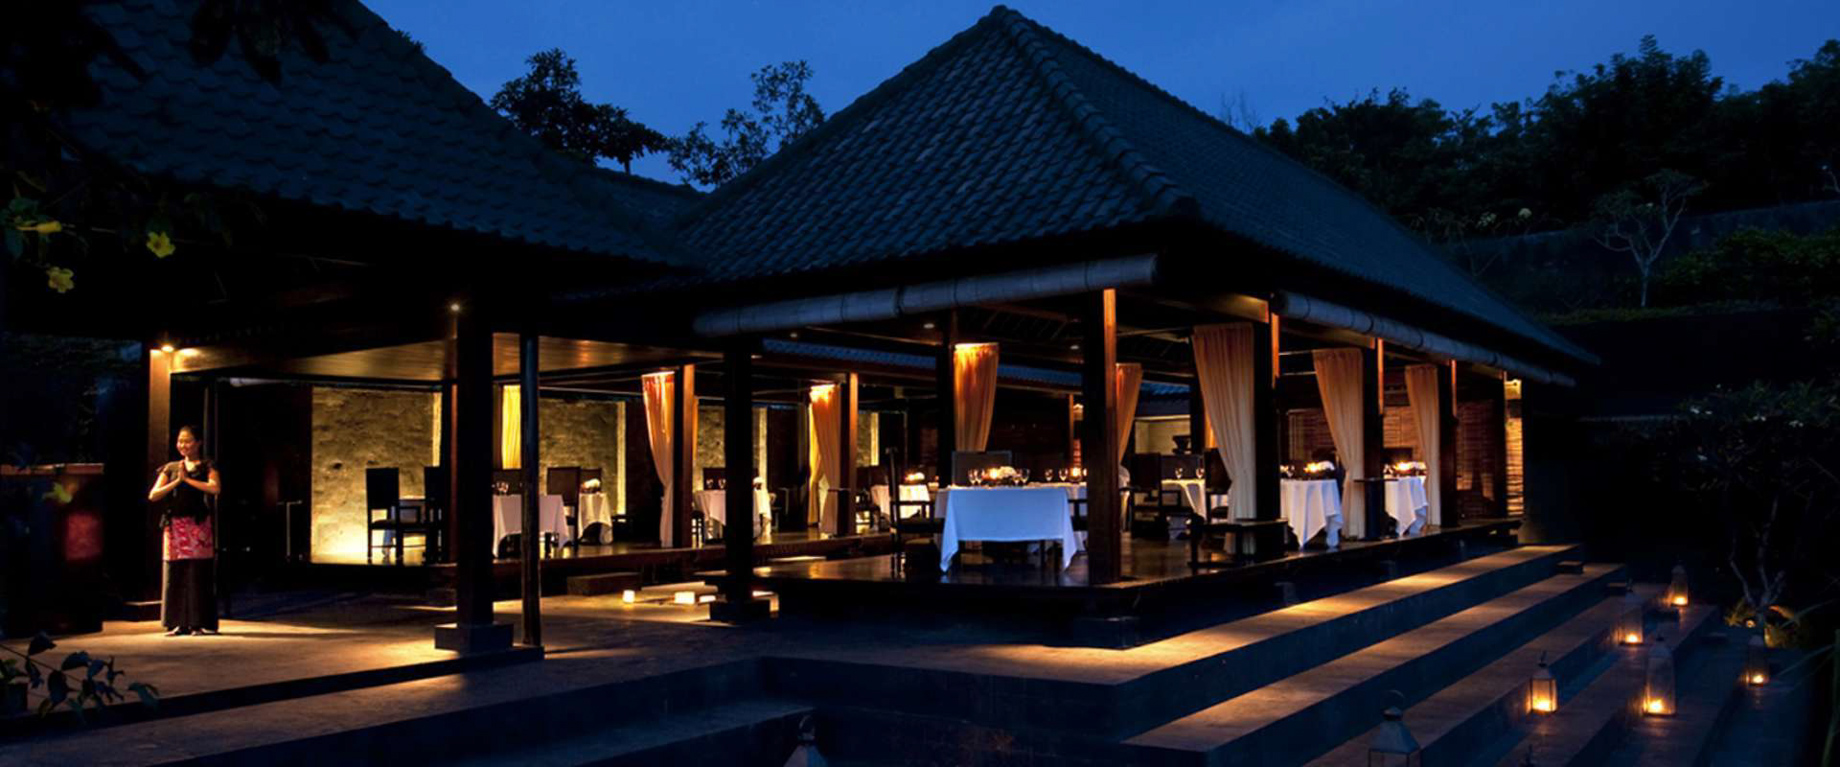 Bvlgari Resort Bali - Uluwatu, Bali, Indonesia - Il Ristorante Luca Fantin Exterior Night